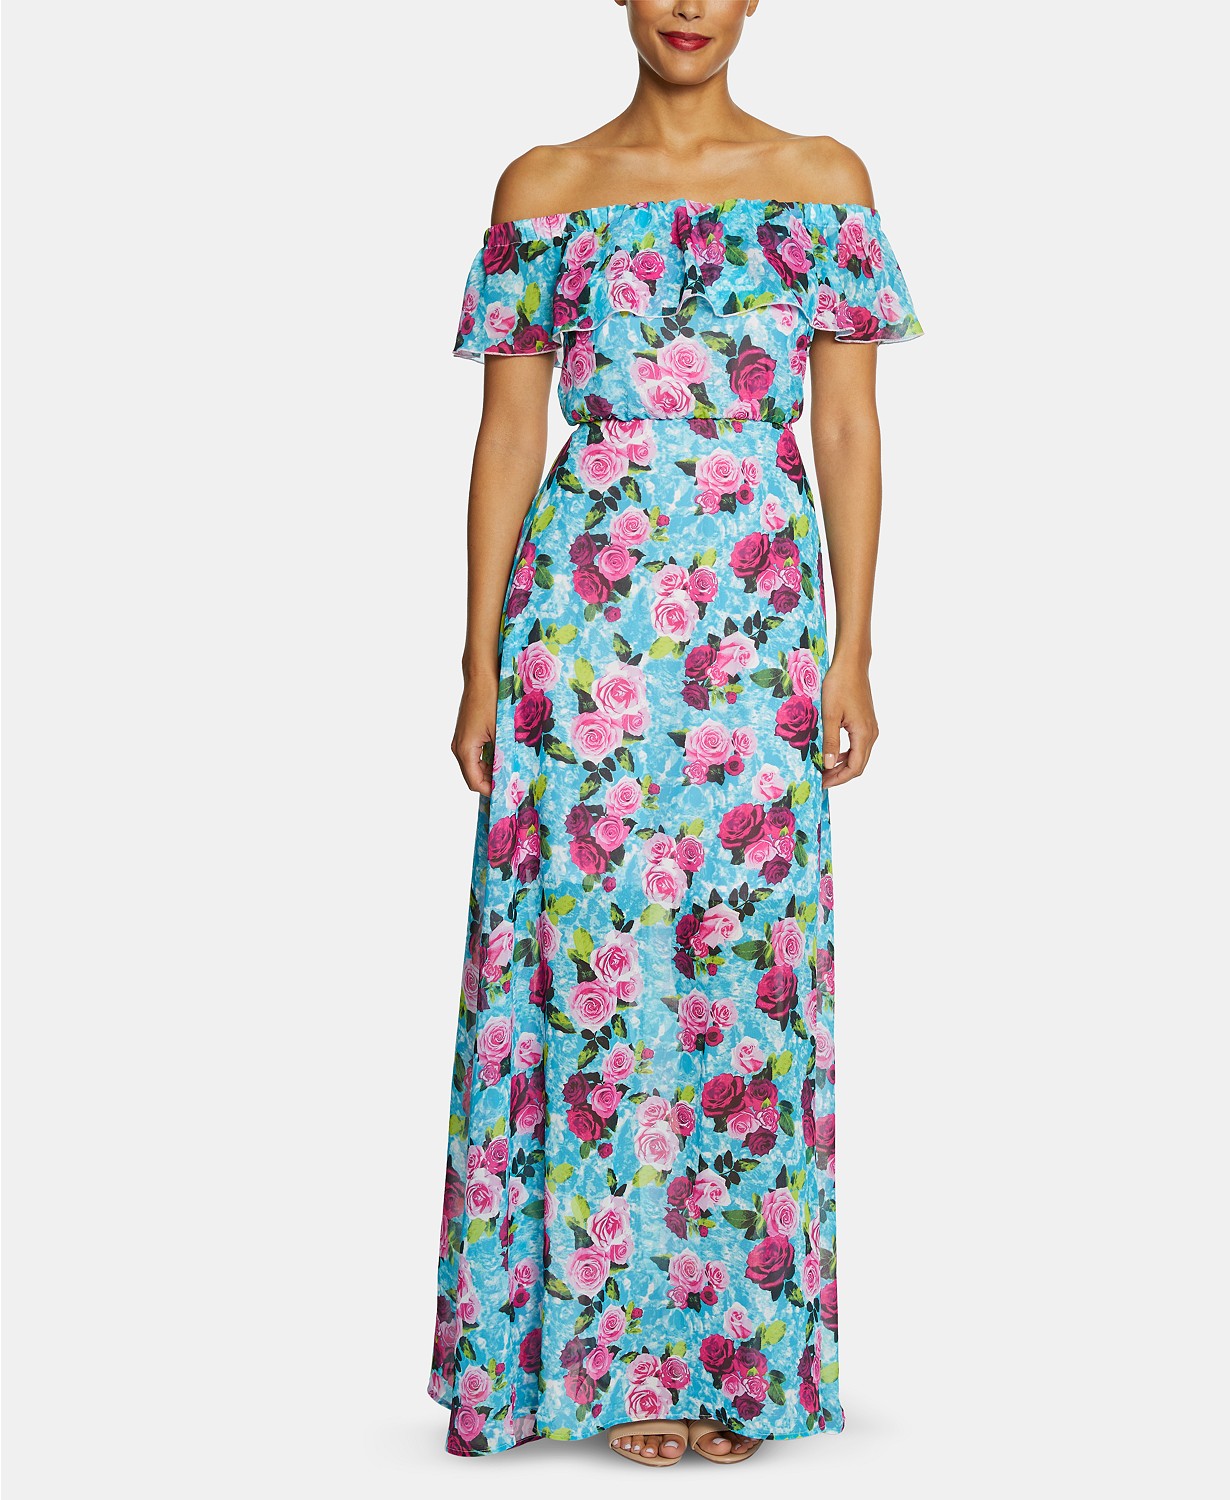 Betsey Johnson Floral Dress